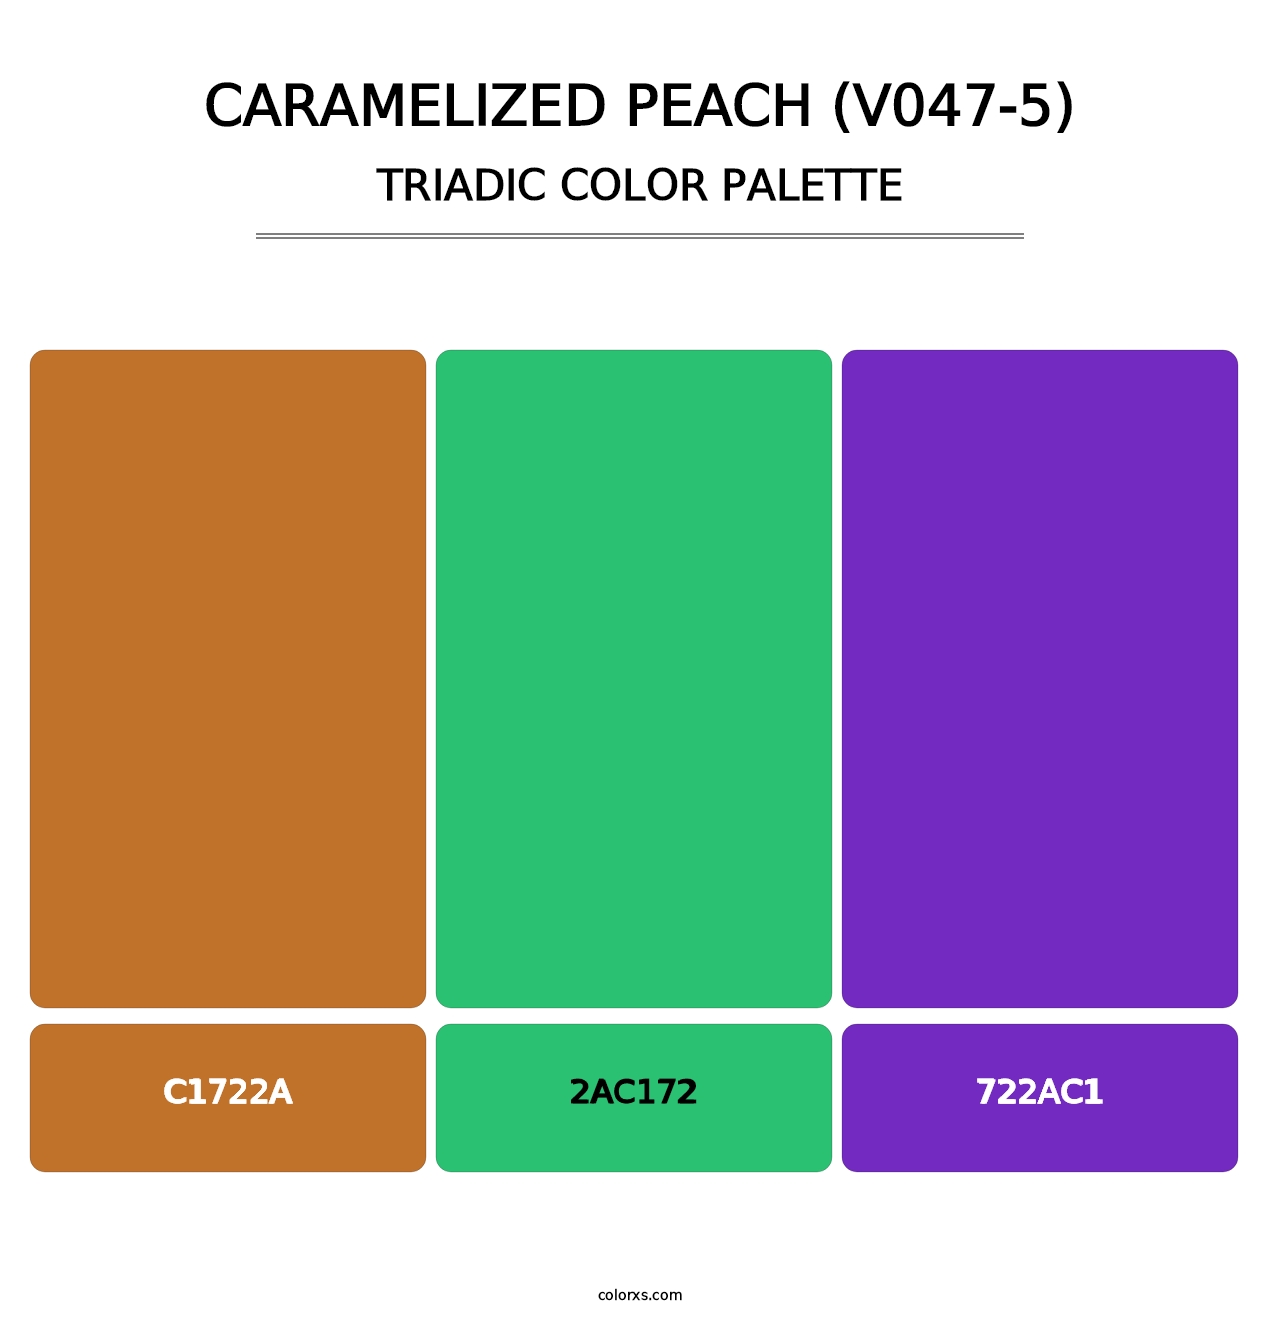 Caramelized Peach (V047-5) - Triadic Color Palette